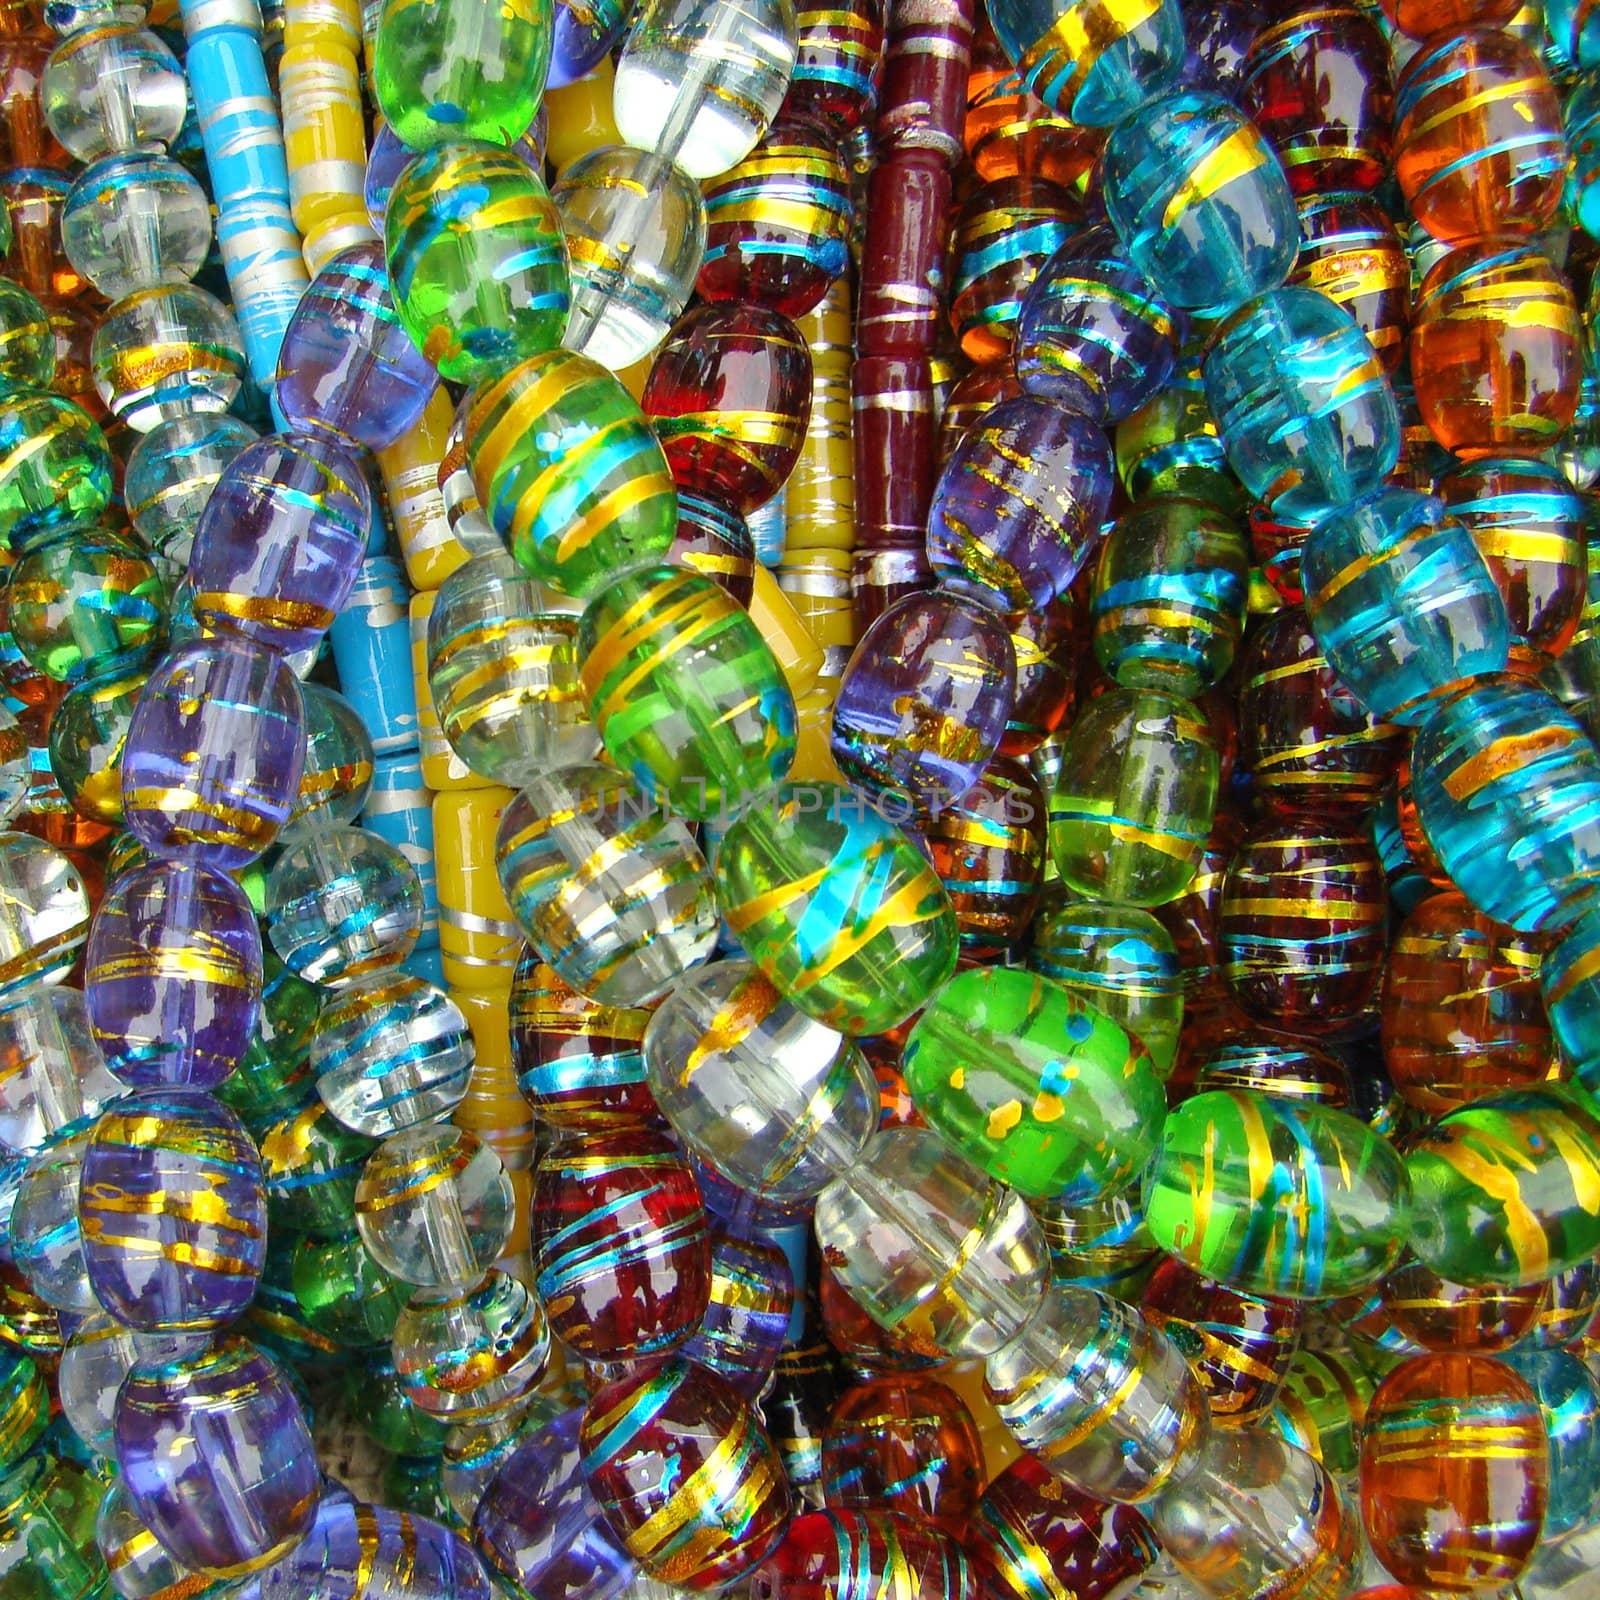          murano glass necklaces                          